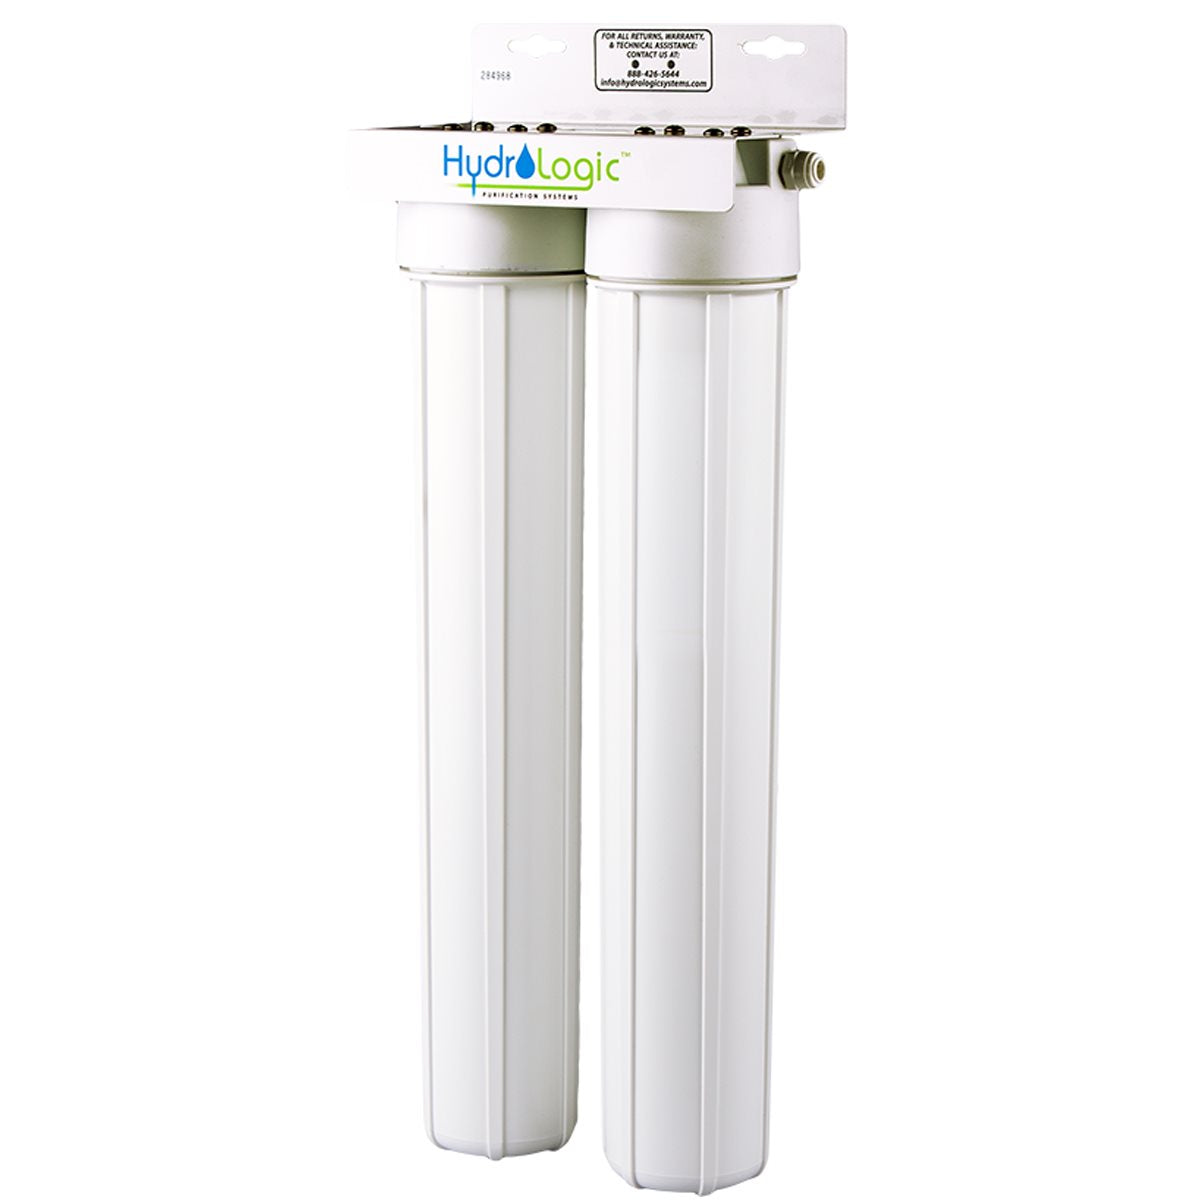 Product Image:Hydro-Logic Tall Boy De-Chlorinator and Sediment Filter